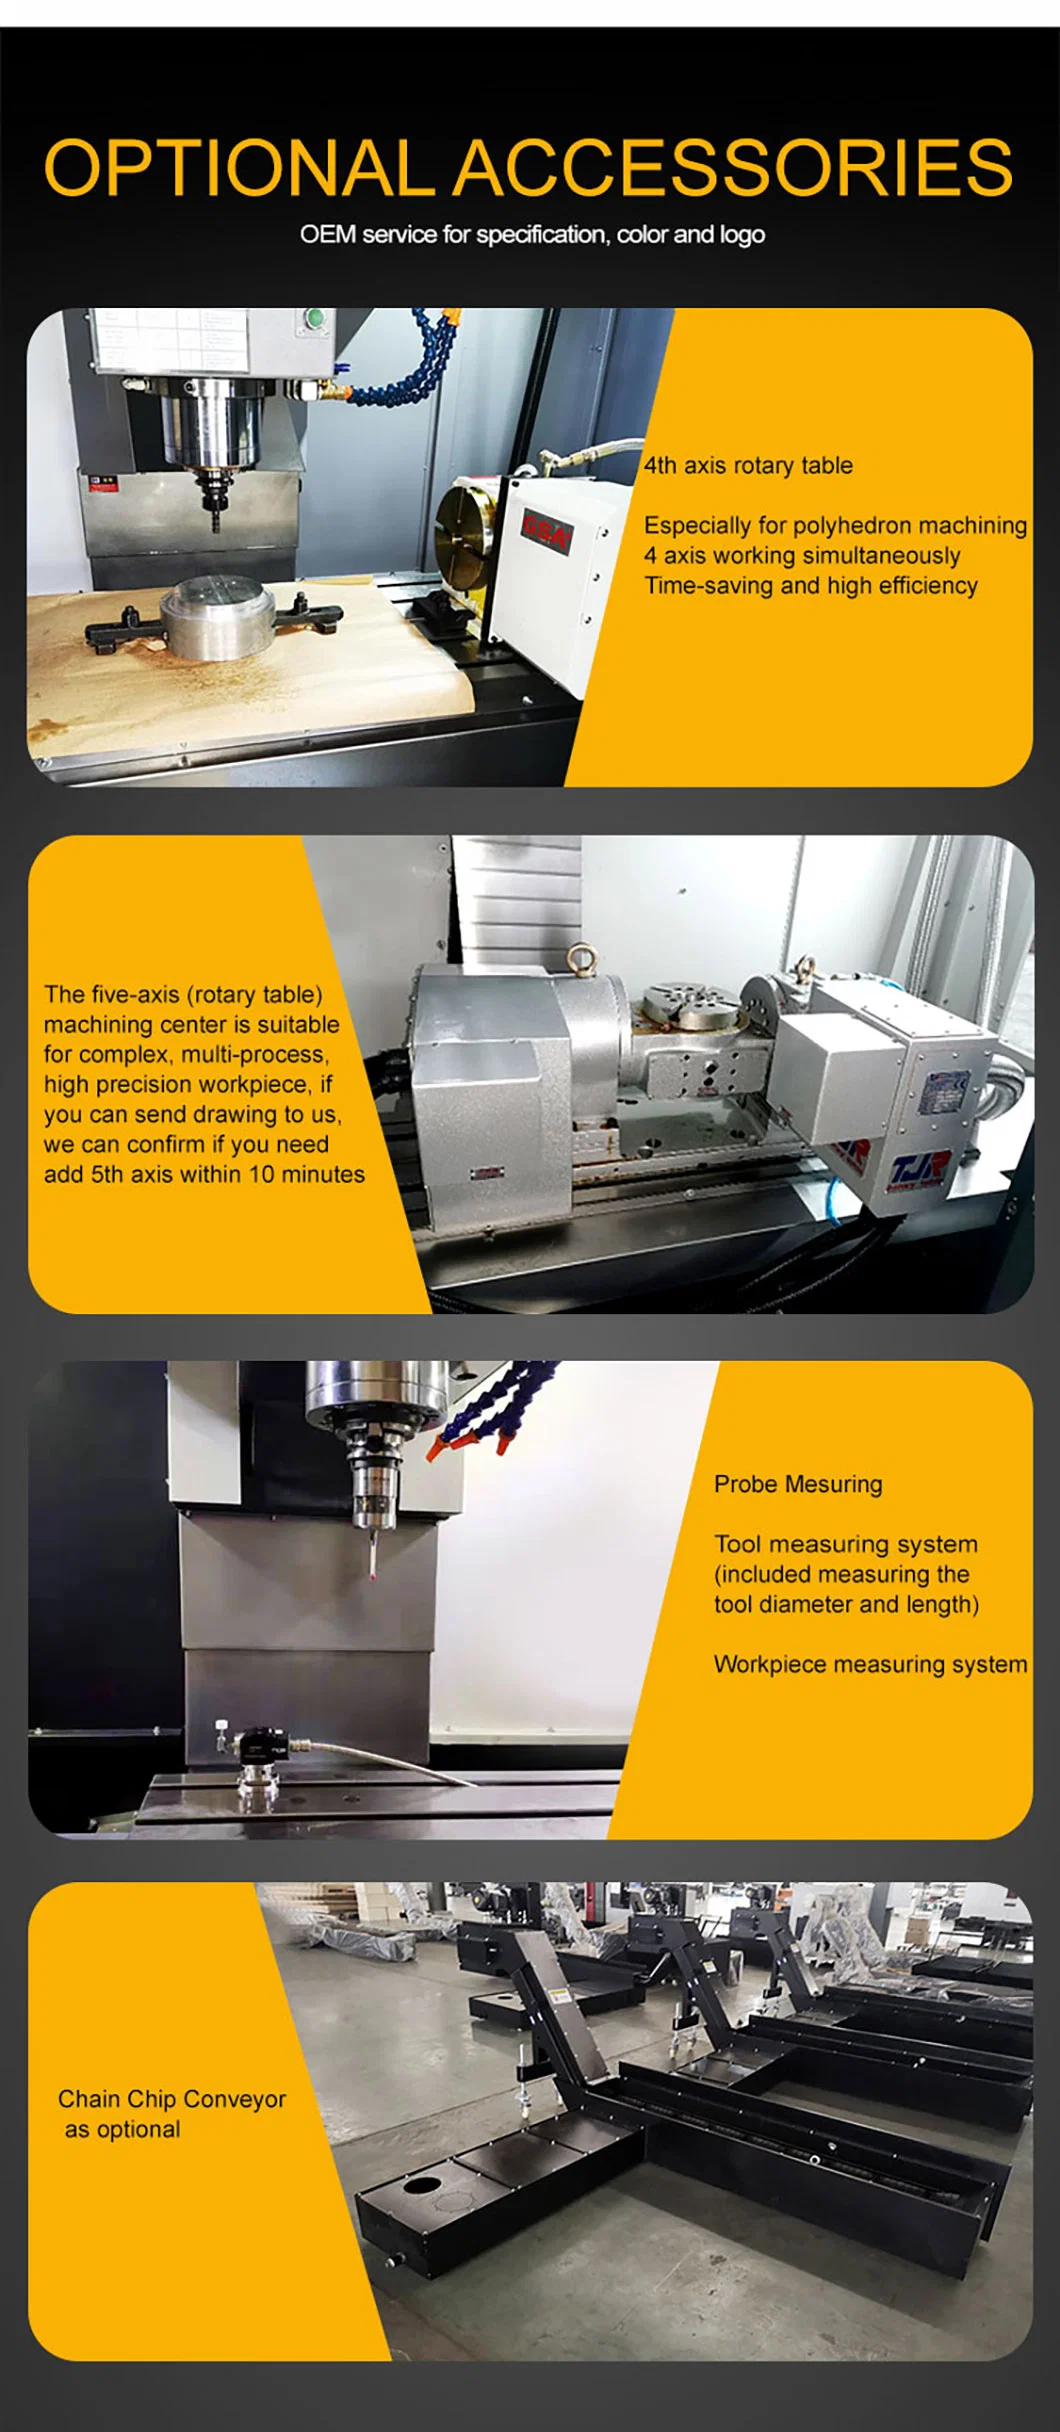 cnc milling machine VMC850L vertical 5 axis cnc machine cnc machining center